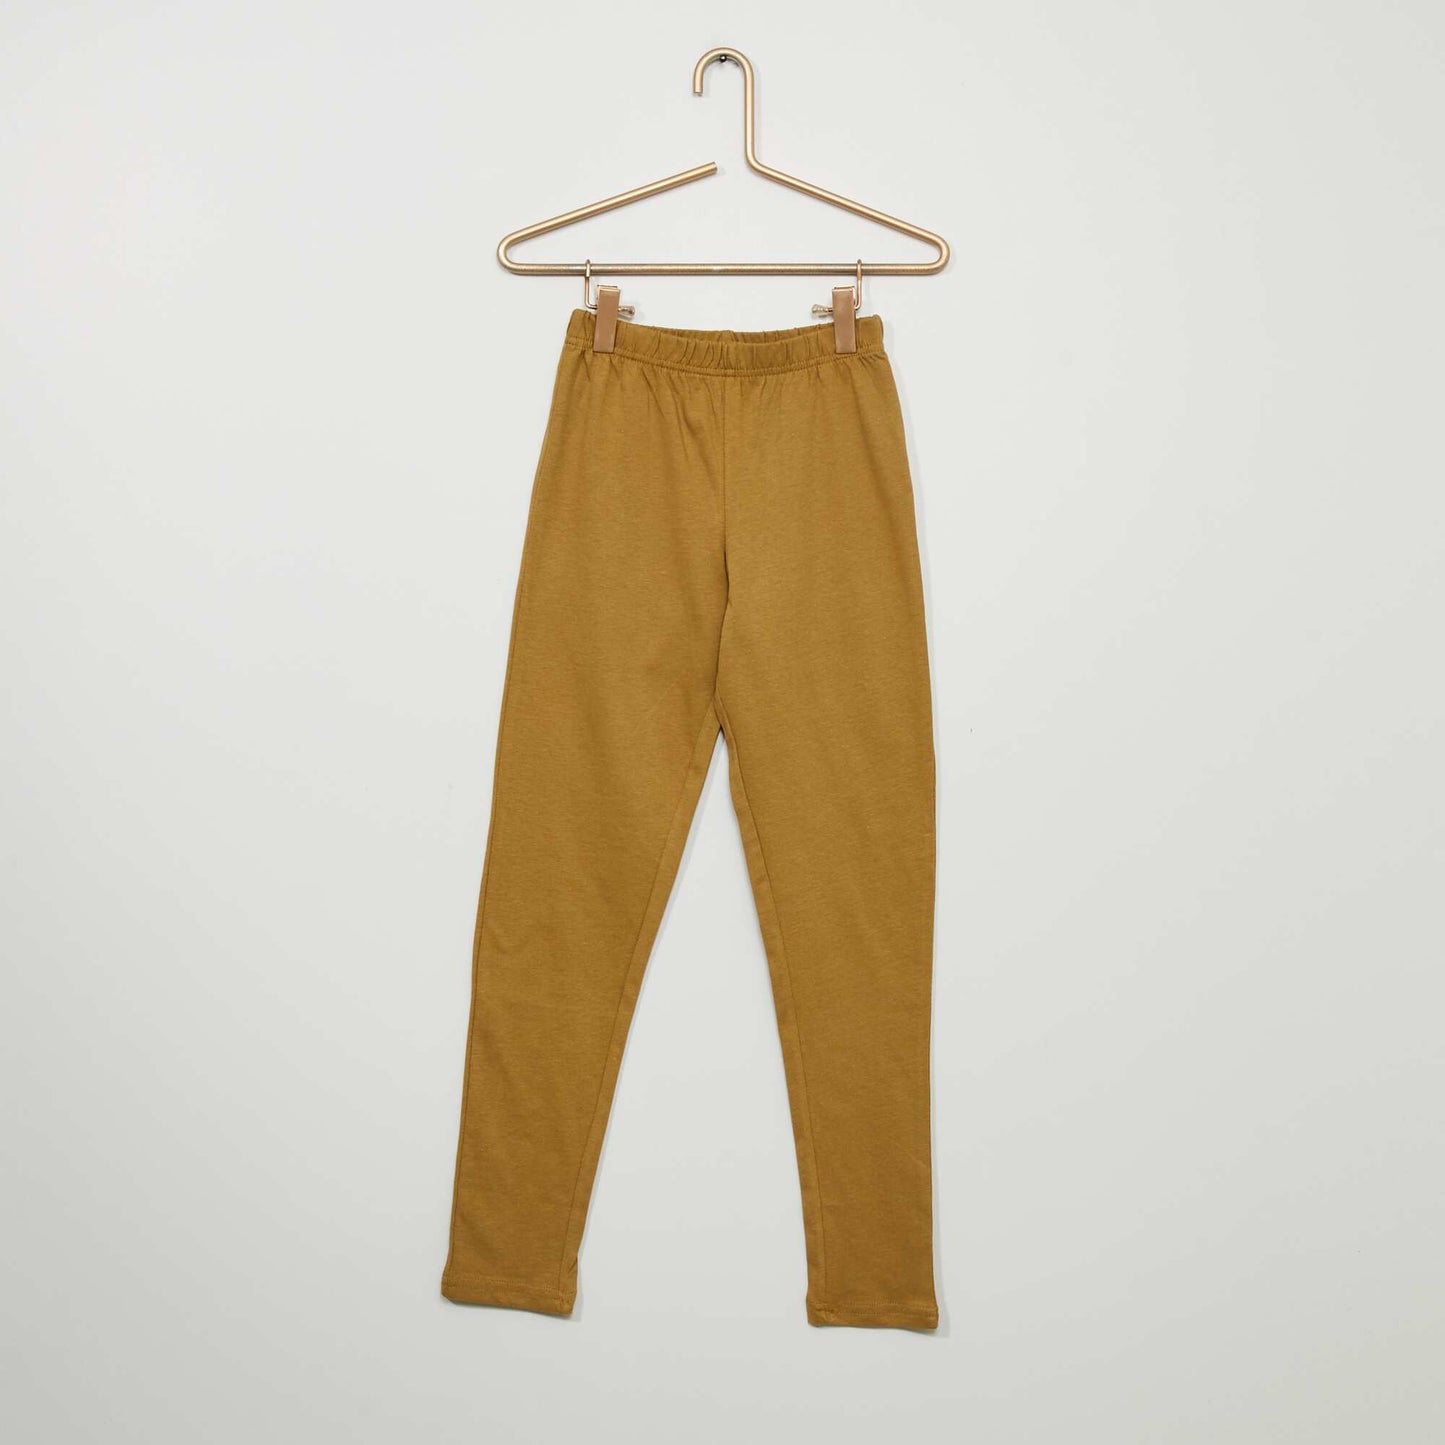 Long jersey pyjamas - Two-piece set BROWN